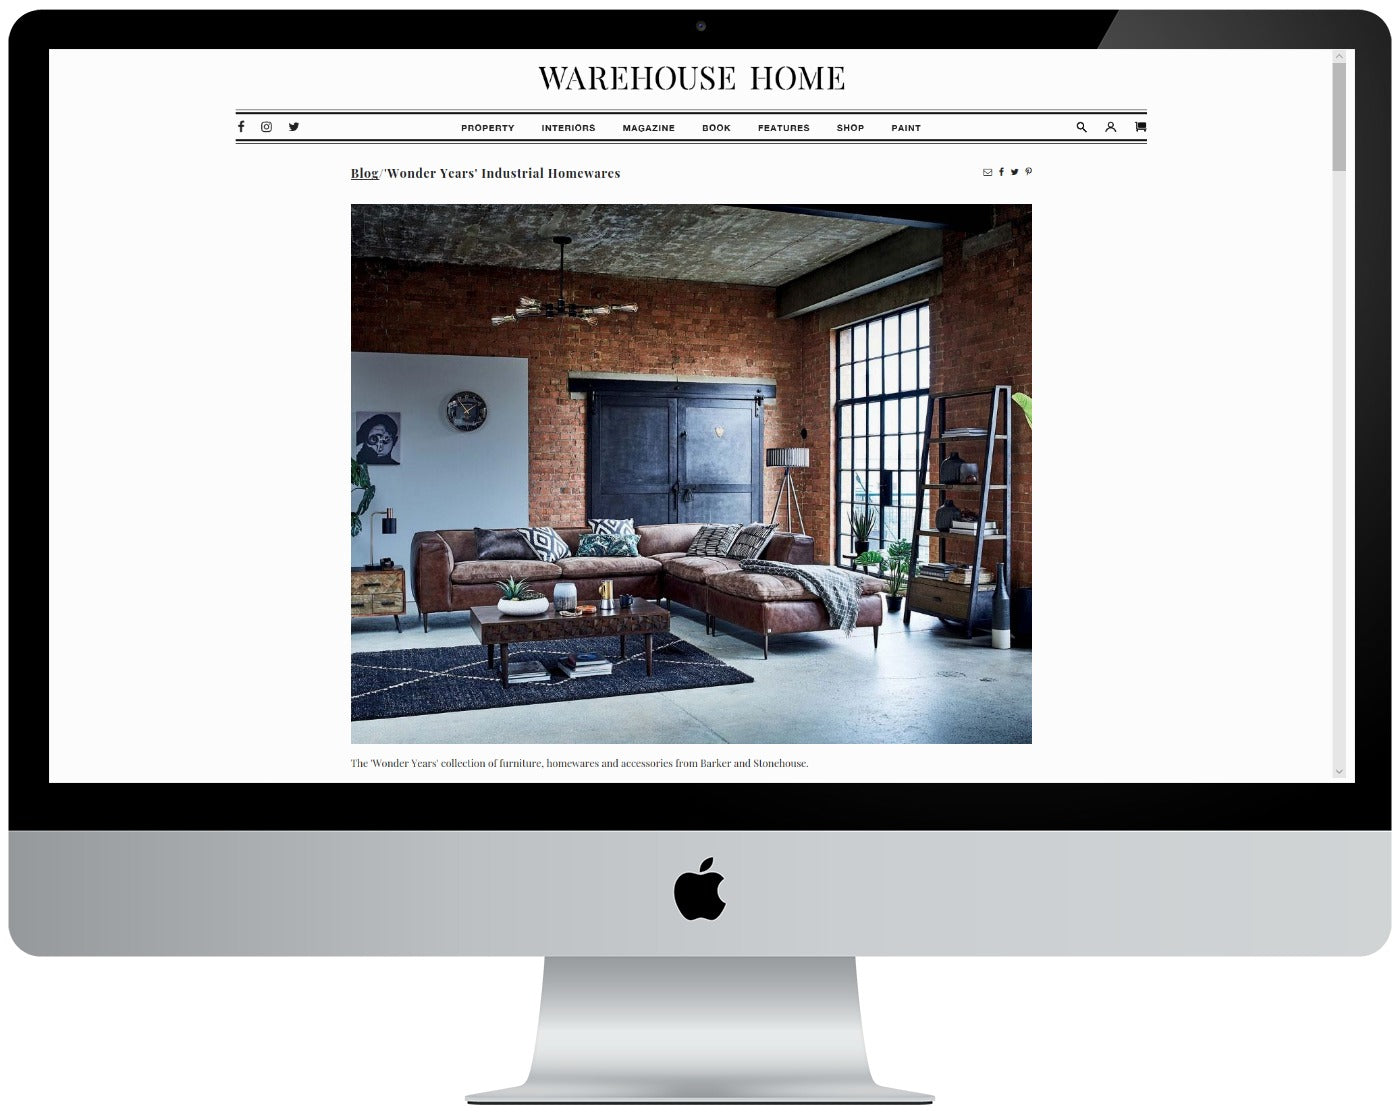 Warehouse home website screenshot